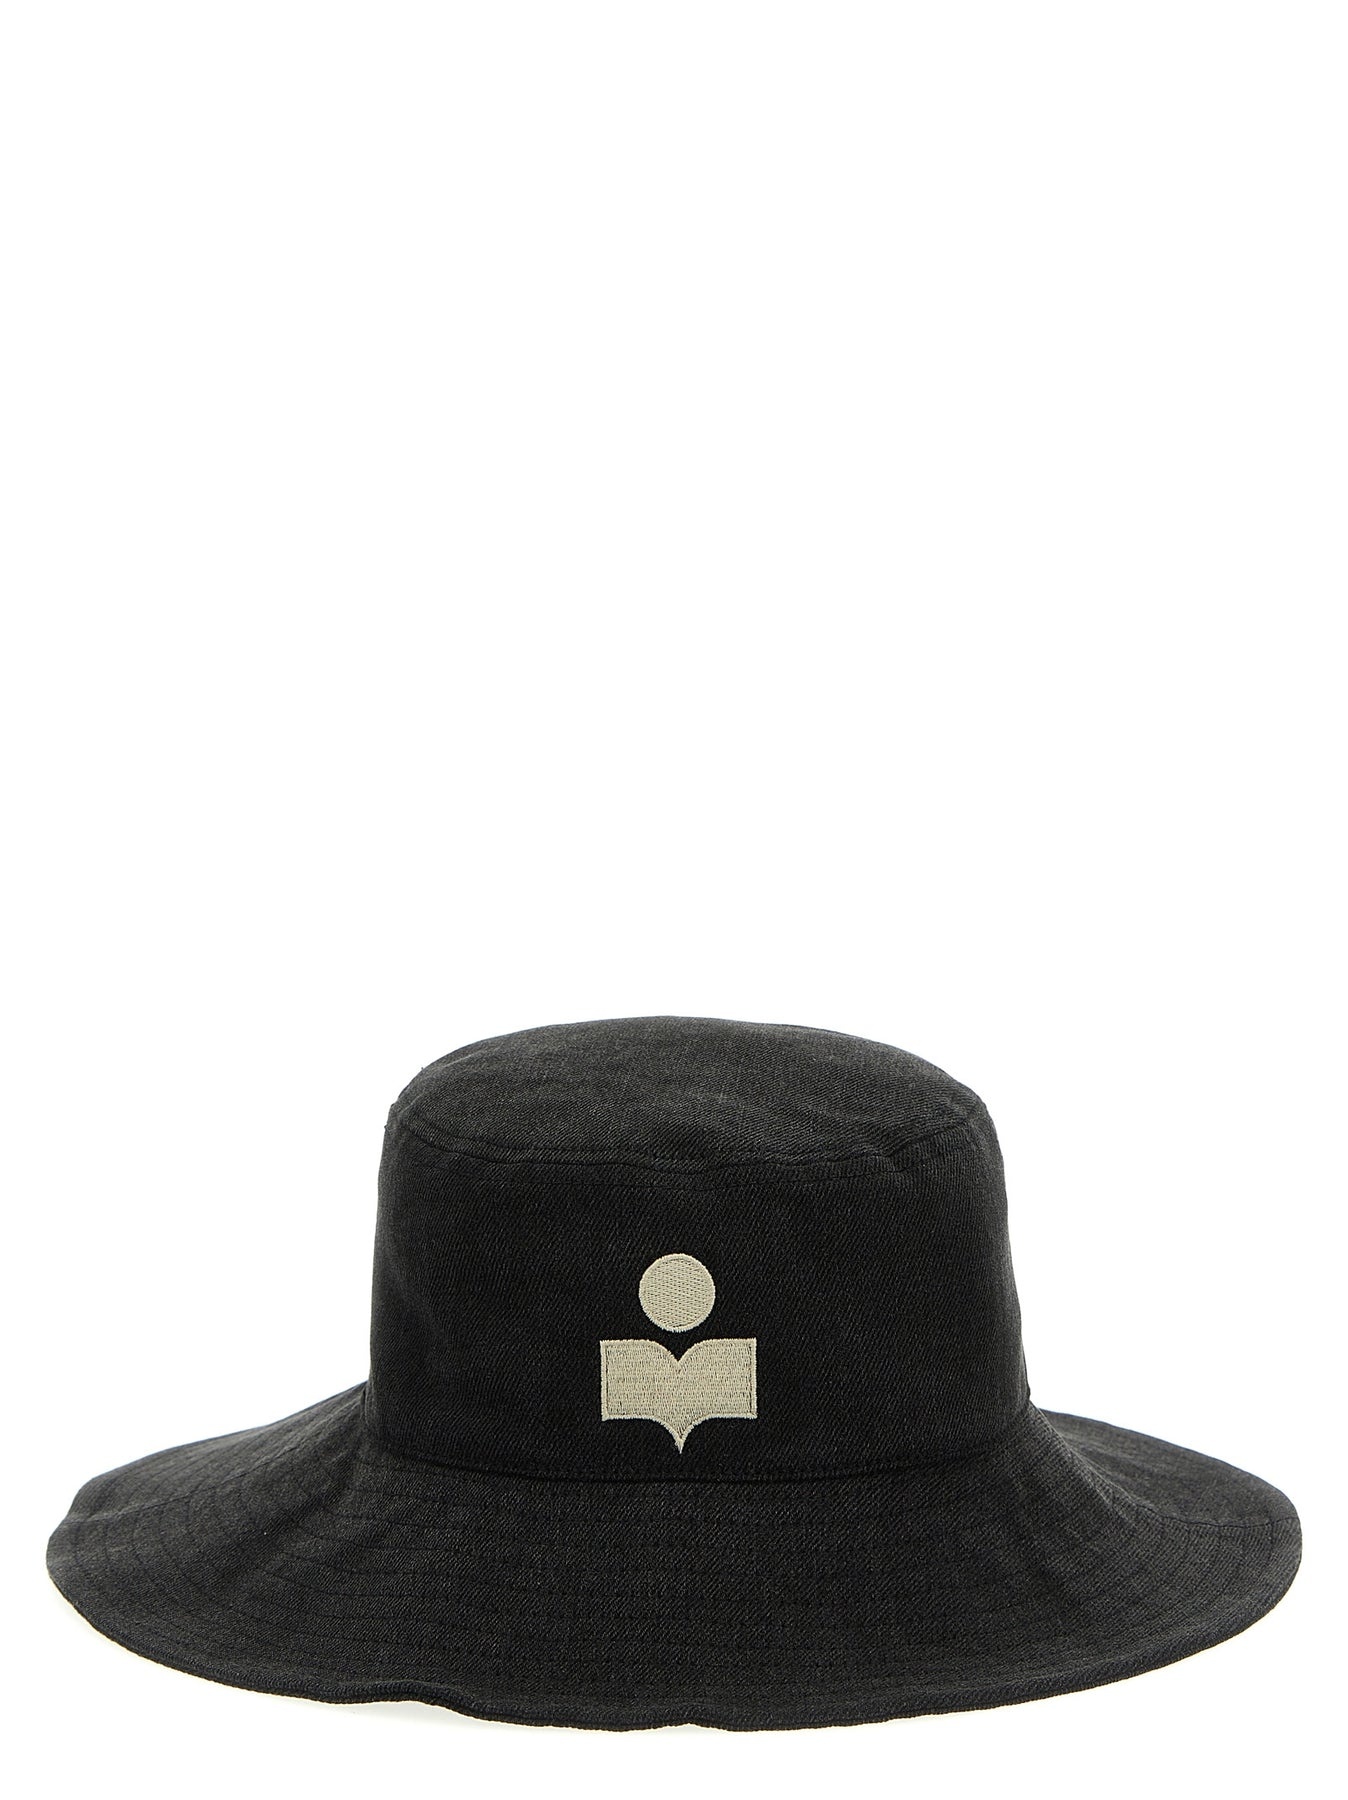 Deliya Hats Black - 1